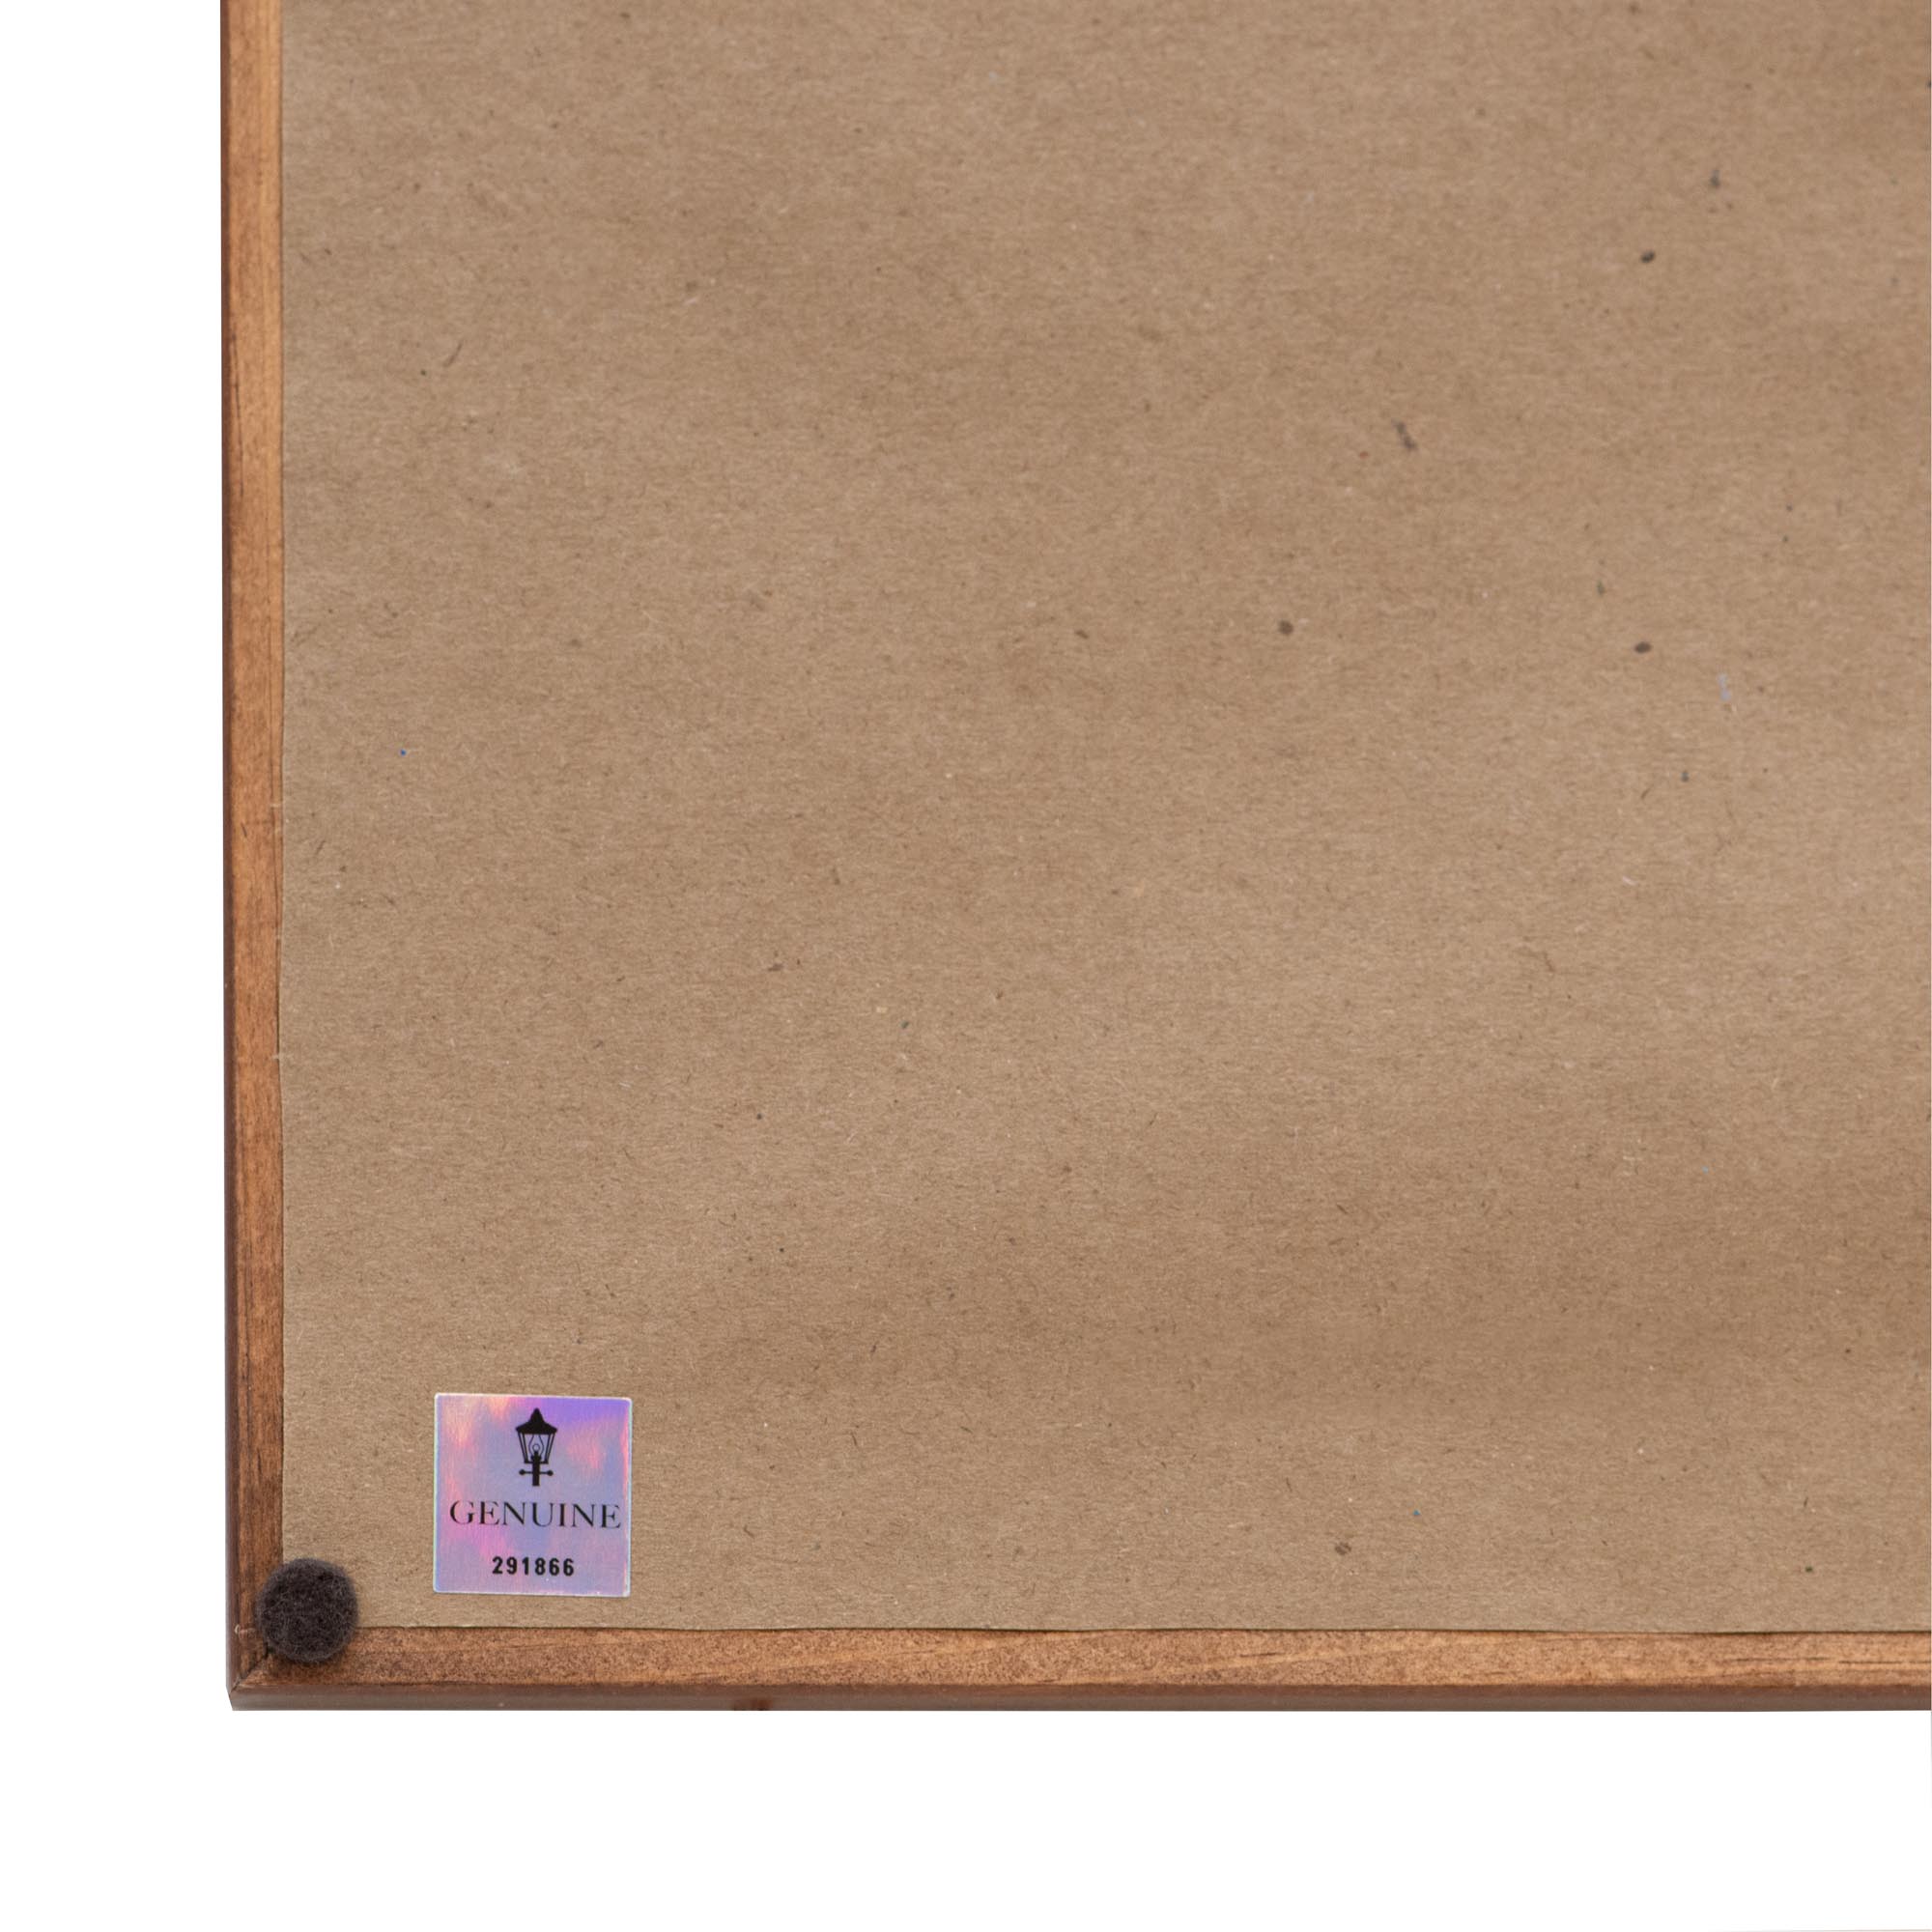 Wayne Manor - Limited Edition Paper